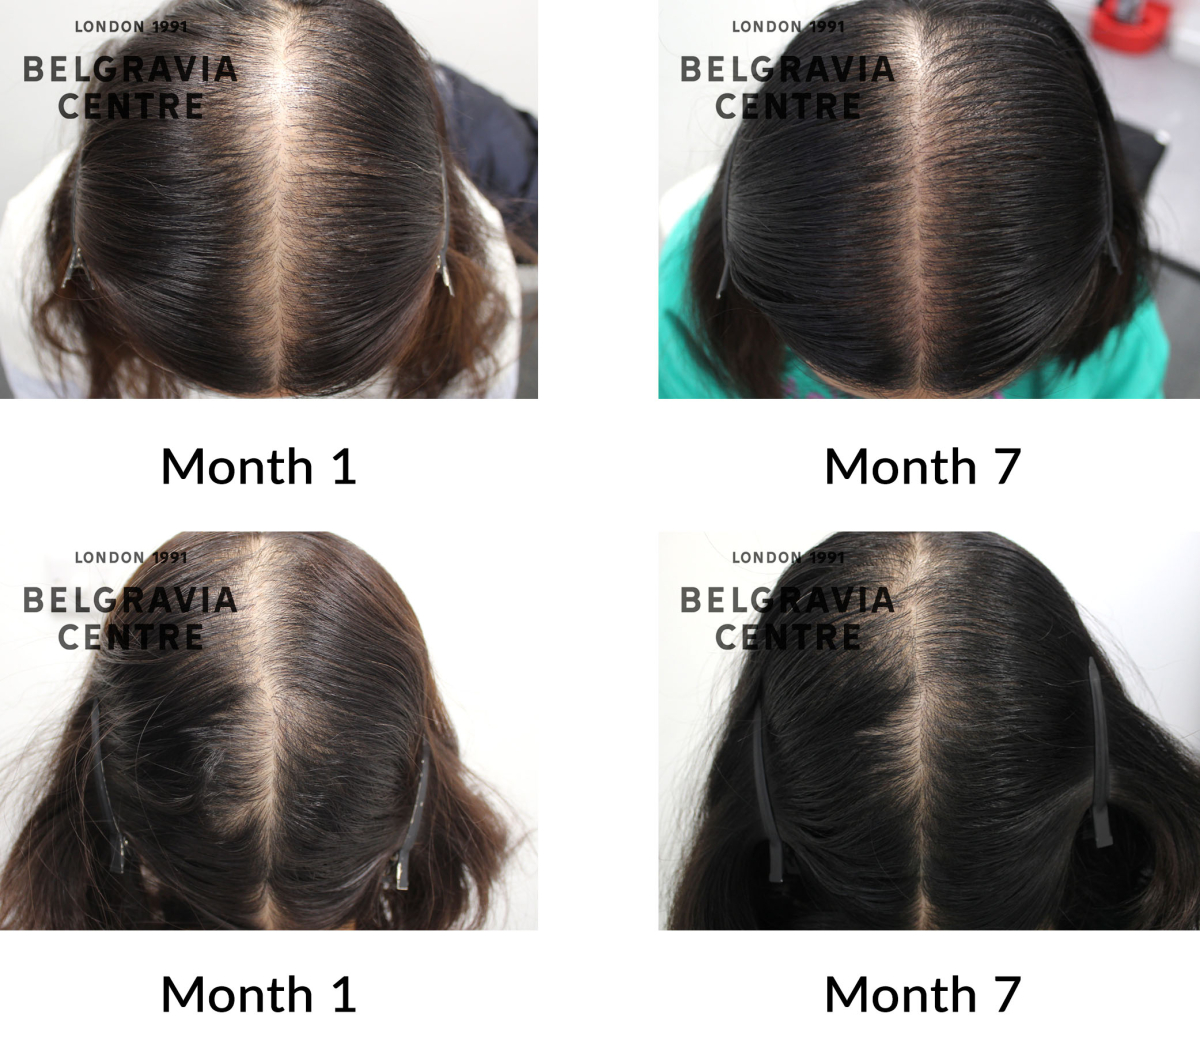 female pattern hair loss the belgravia centre 433436